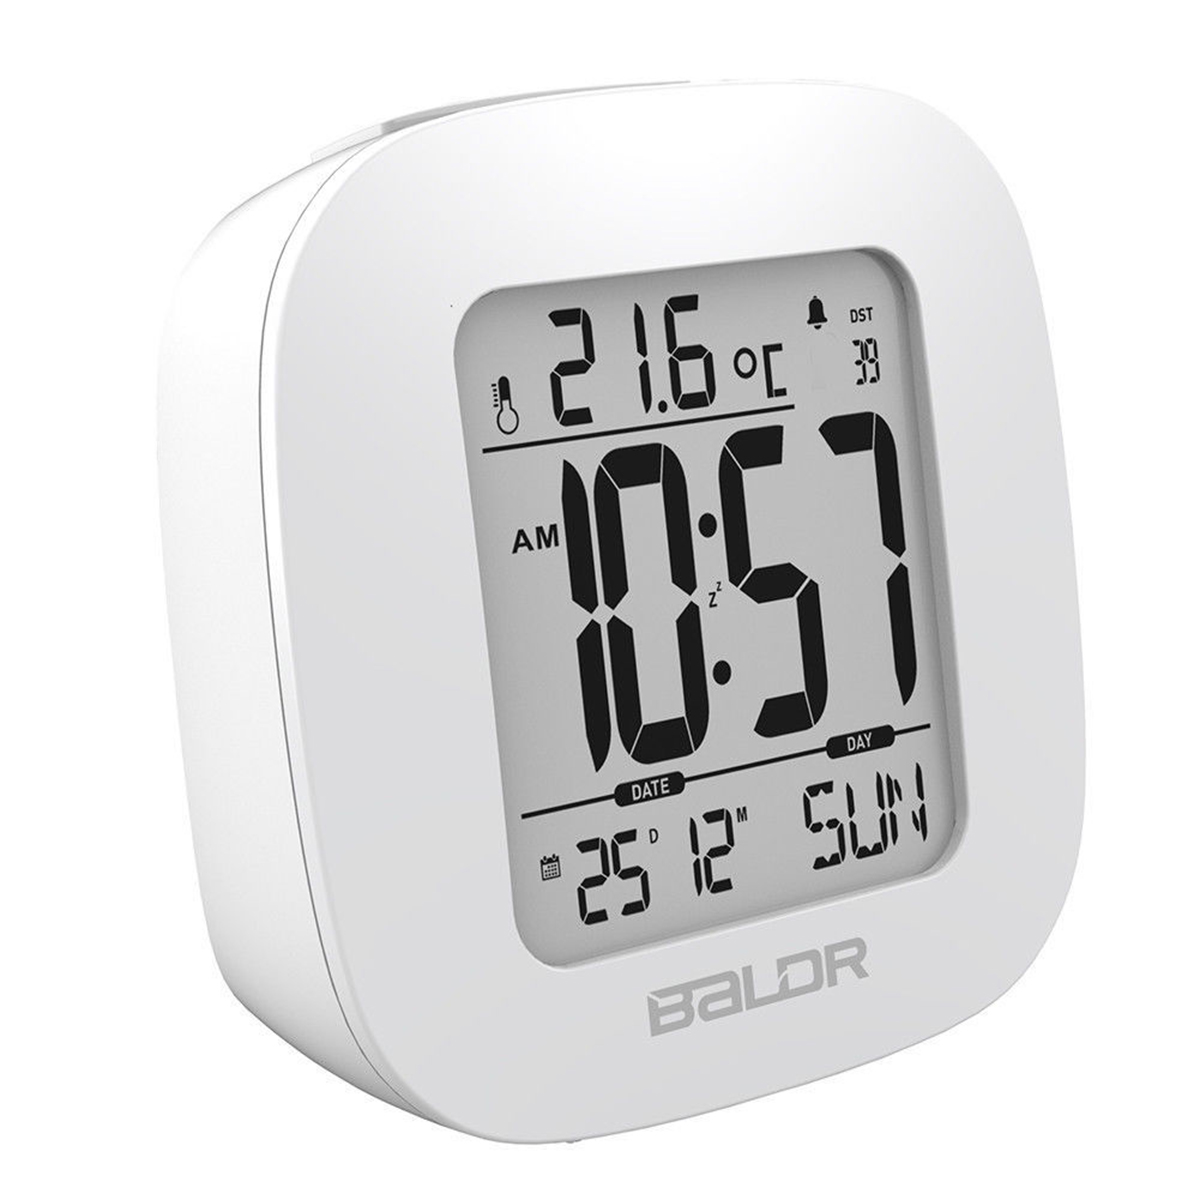 

Display LCD Digital Thermometer Alarm Snooze Clock Time Calendar Temperature Date